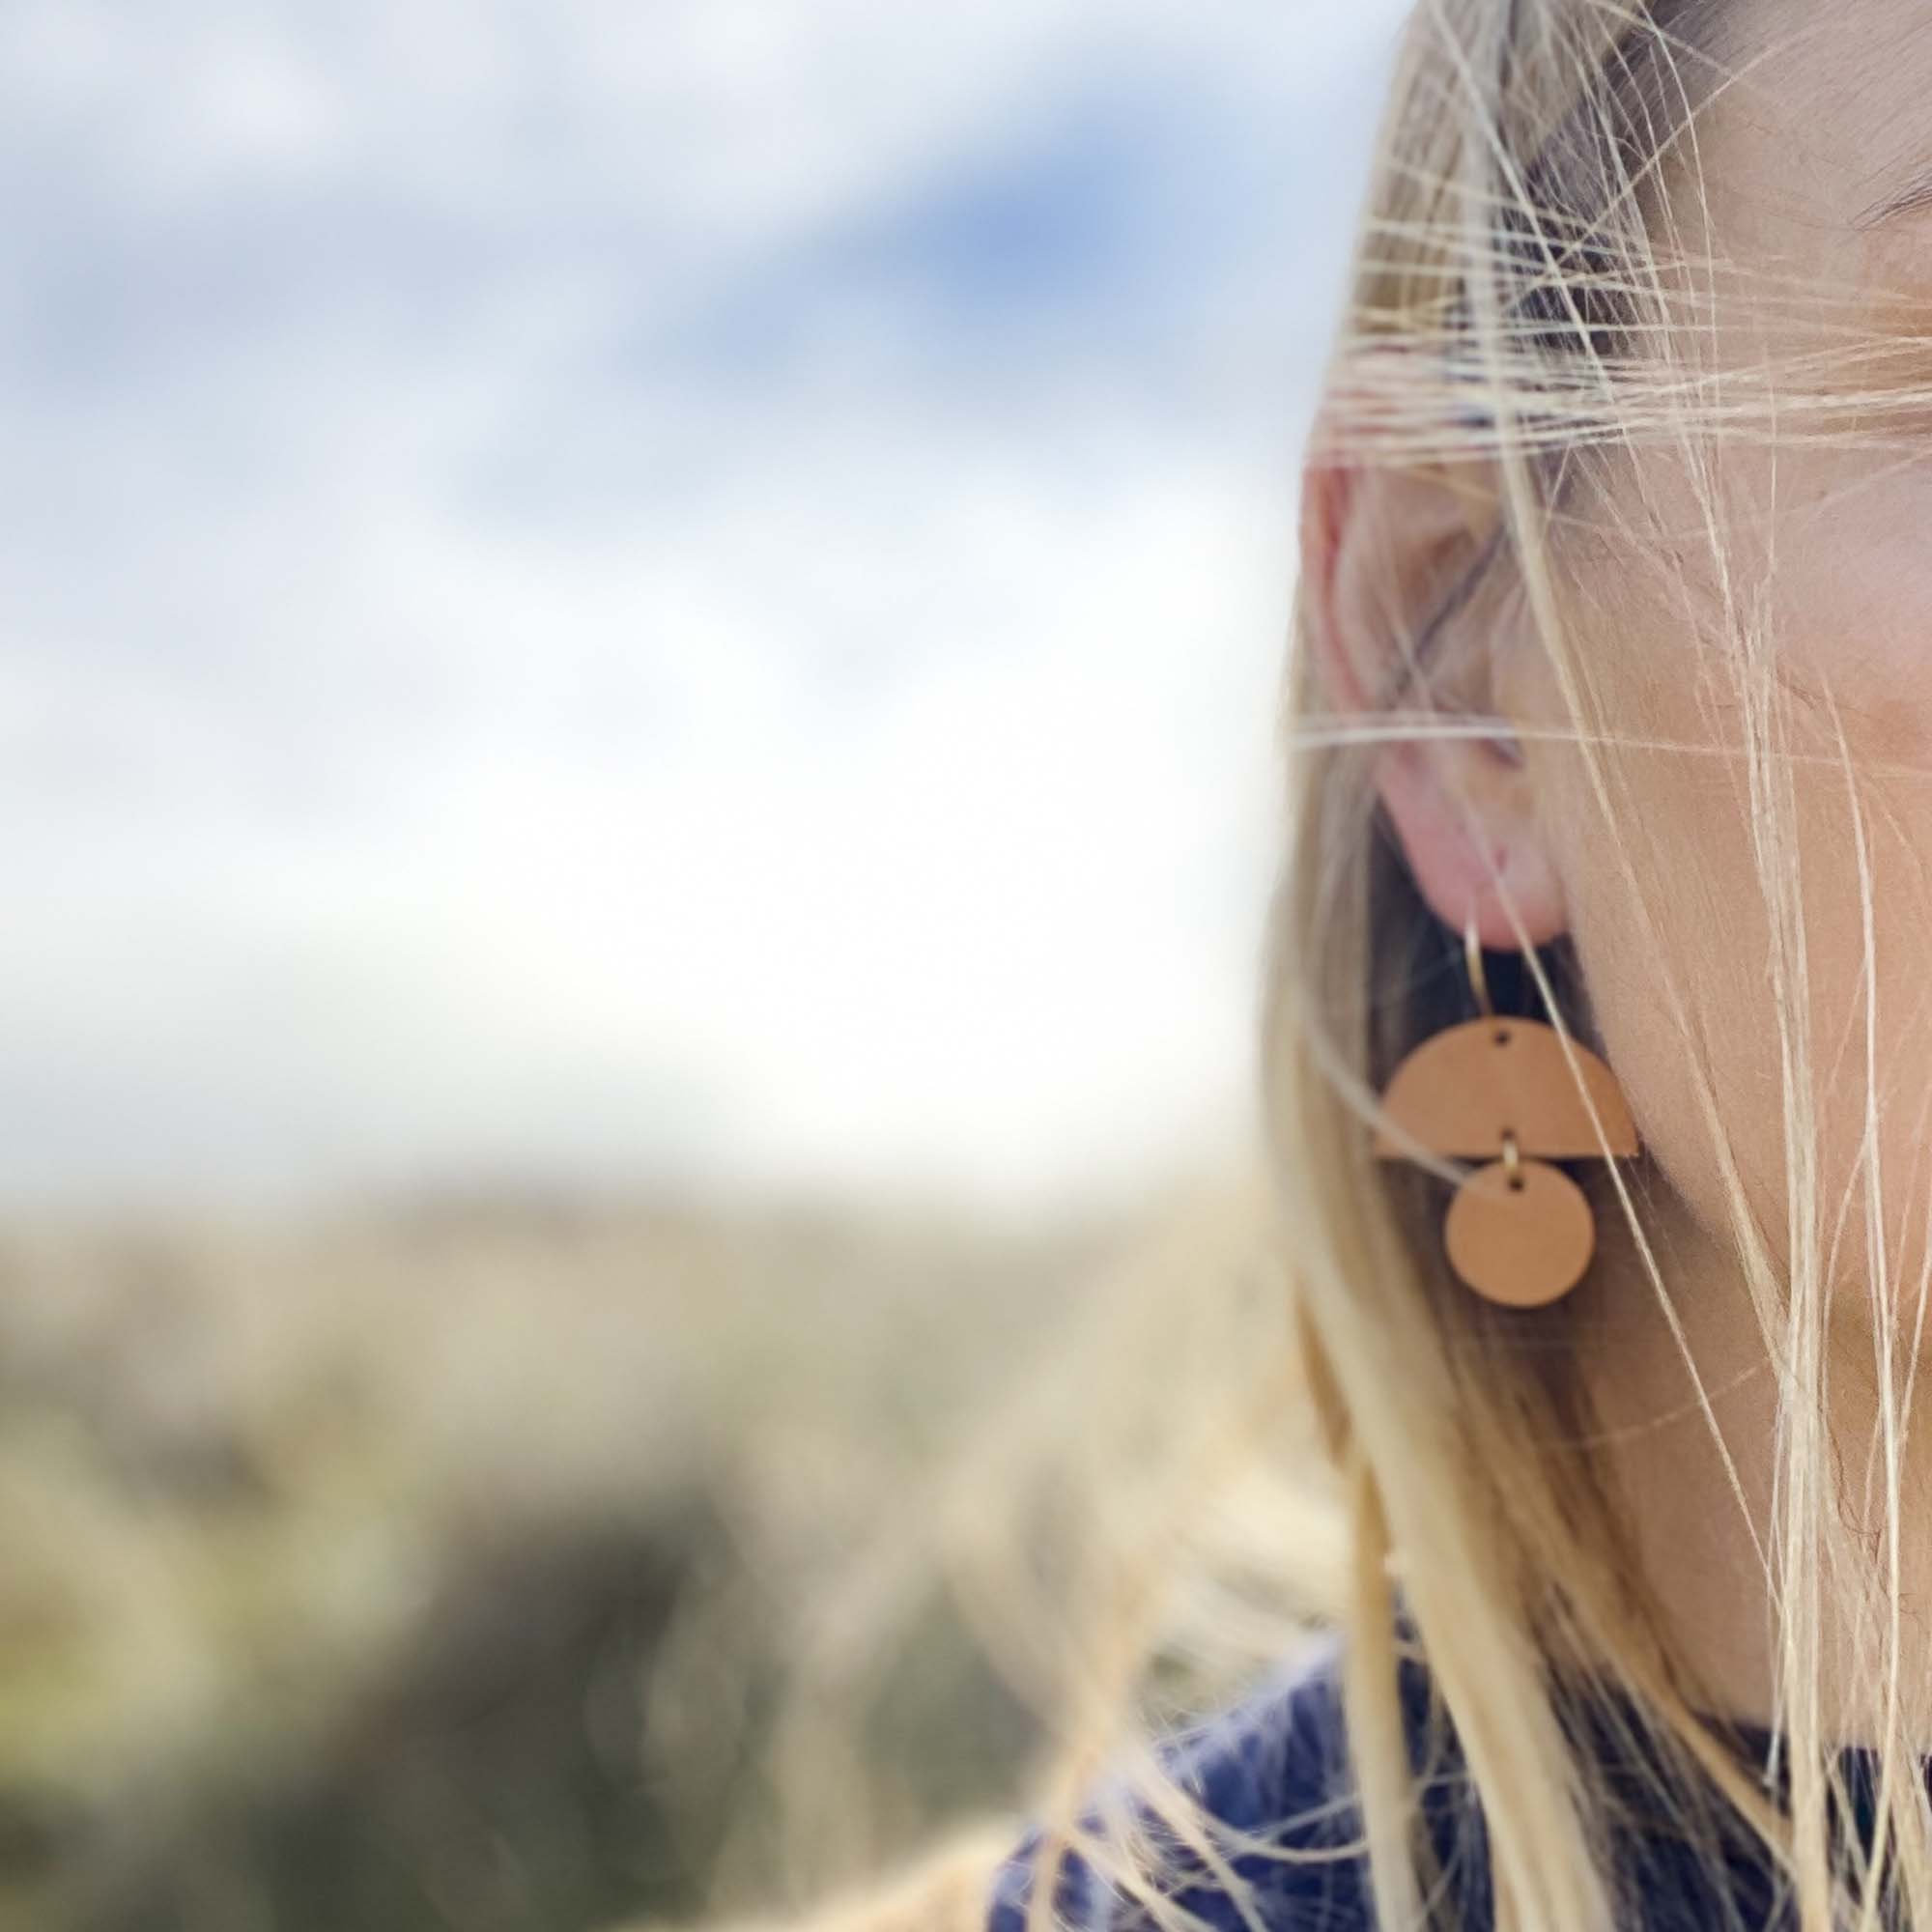 Sunrise Hoop Earrings Made From Brown Vegetable Tan Leather. Lightweight Statement Earrings in A Minimalist, Geometric Style